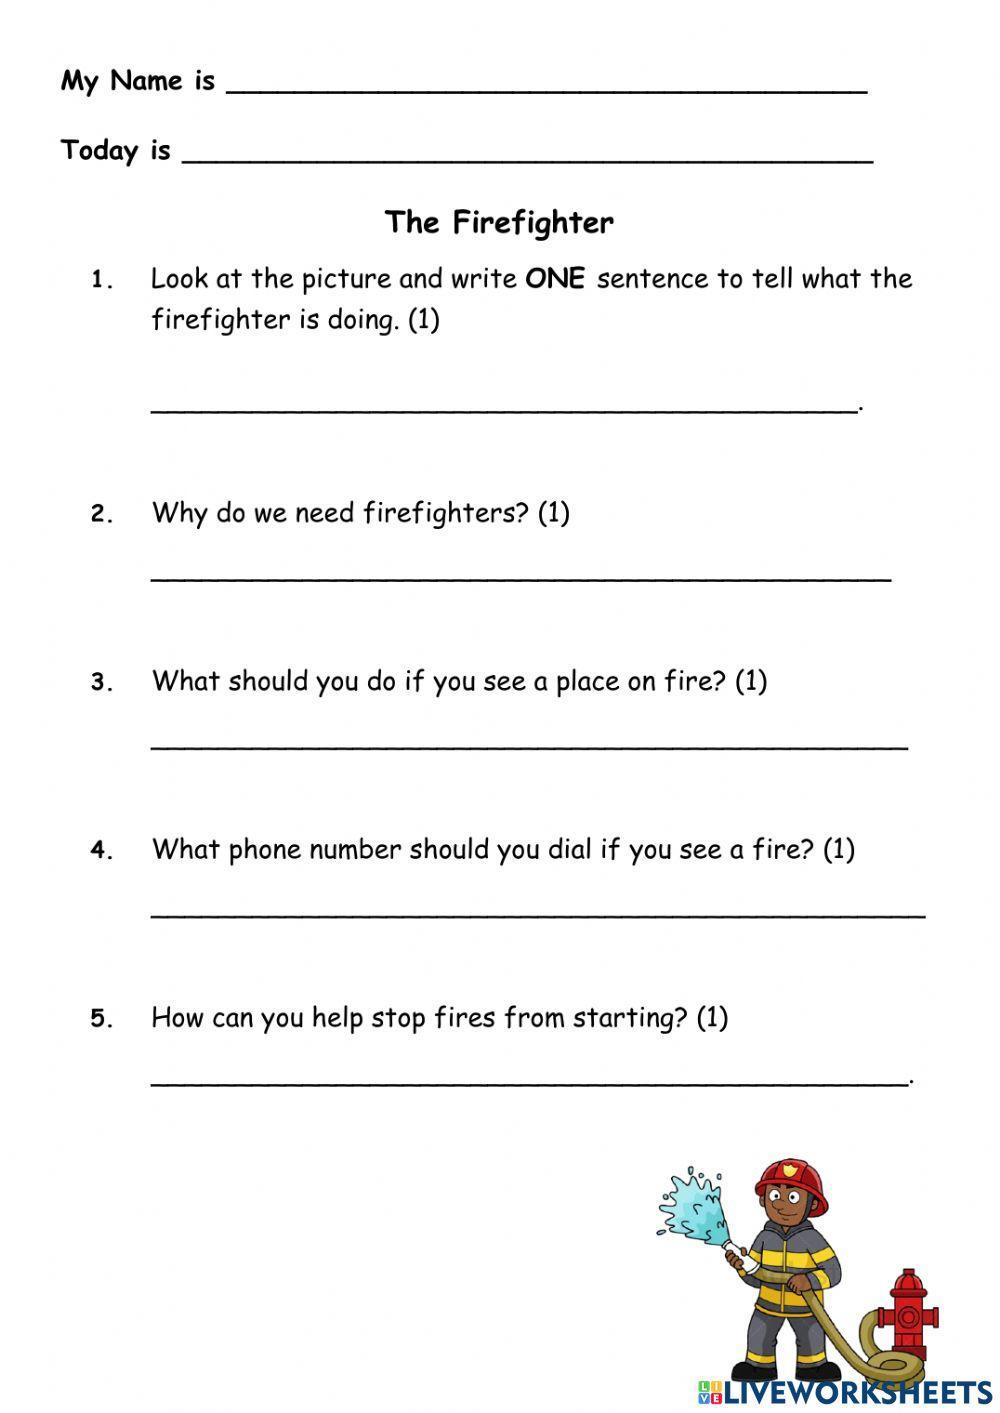 The Firefighter - Community Helpers - Worksheet - Social Studies